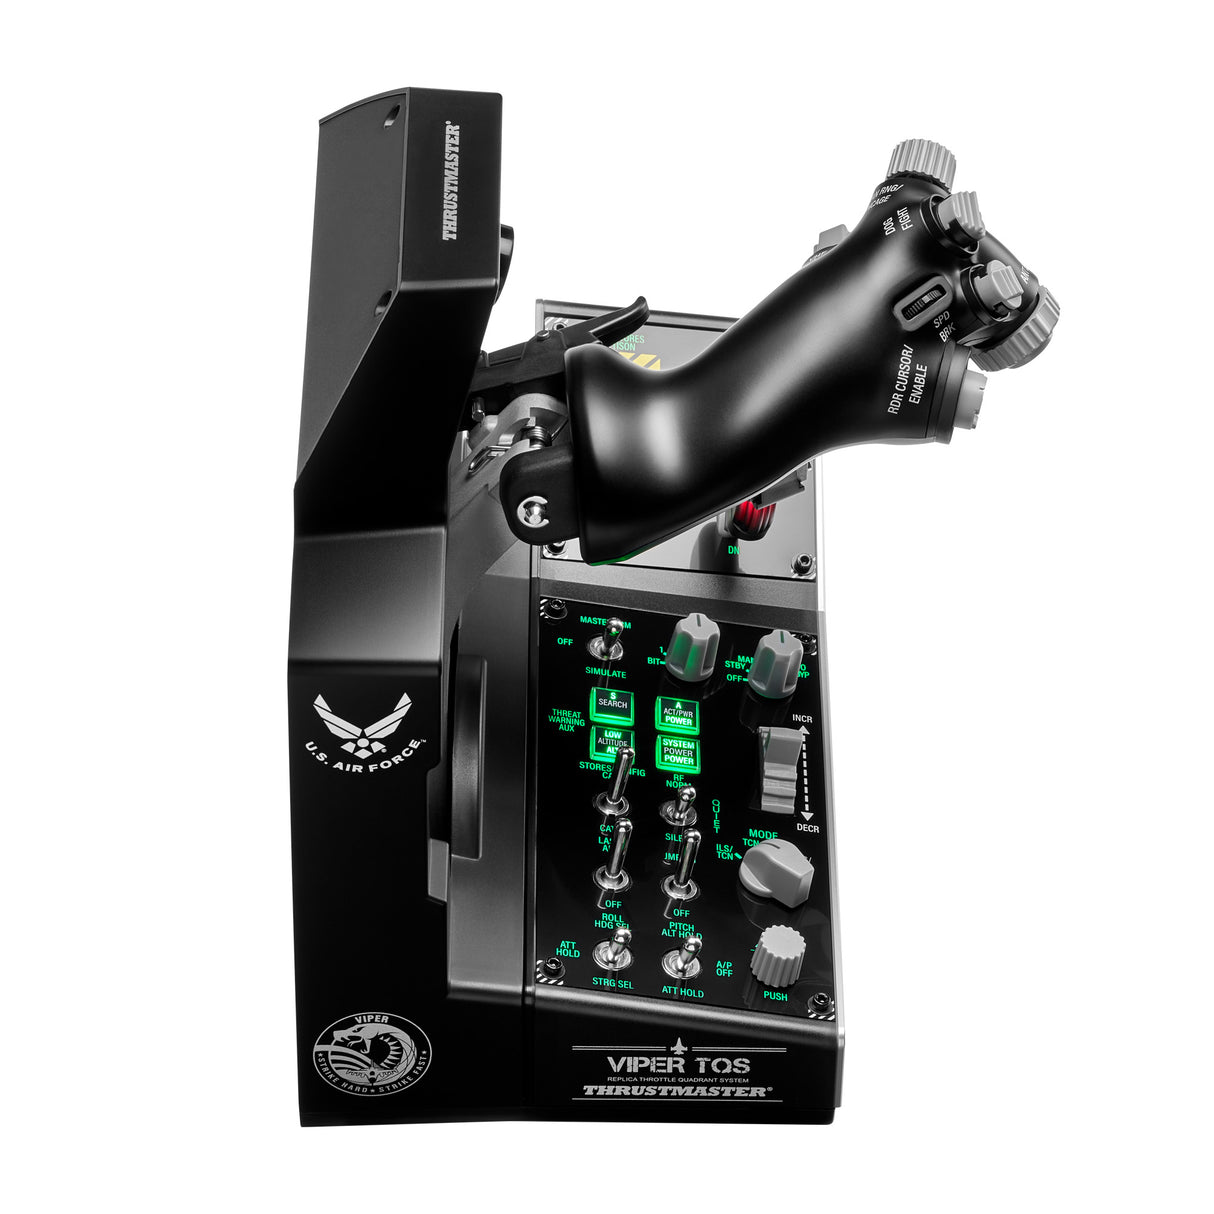 T818 Phone Holder (Thrustmaster) - Adjustable height